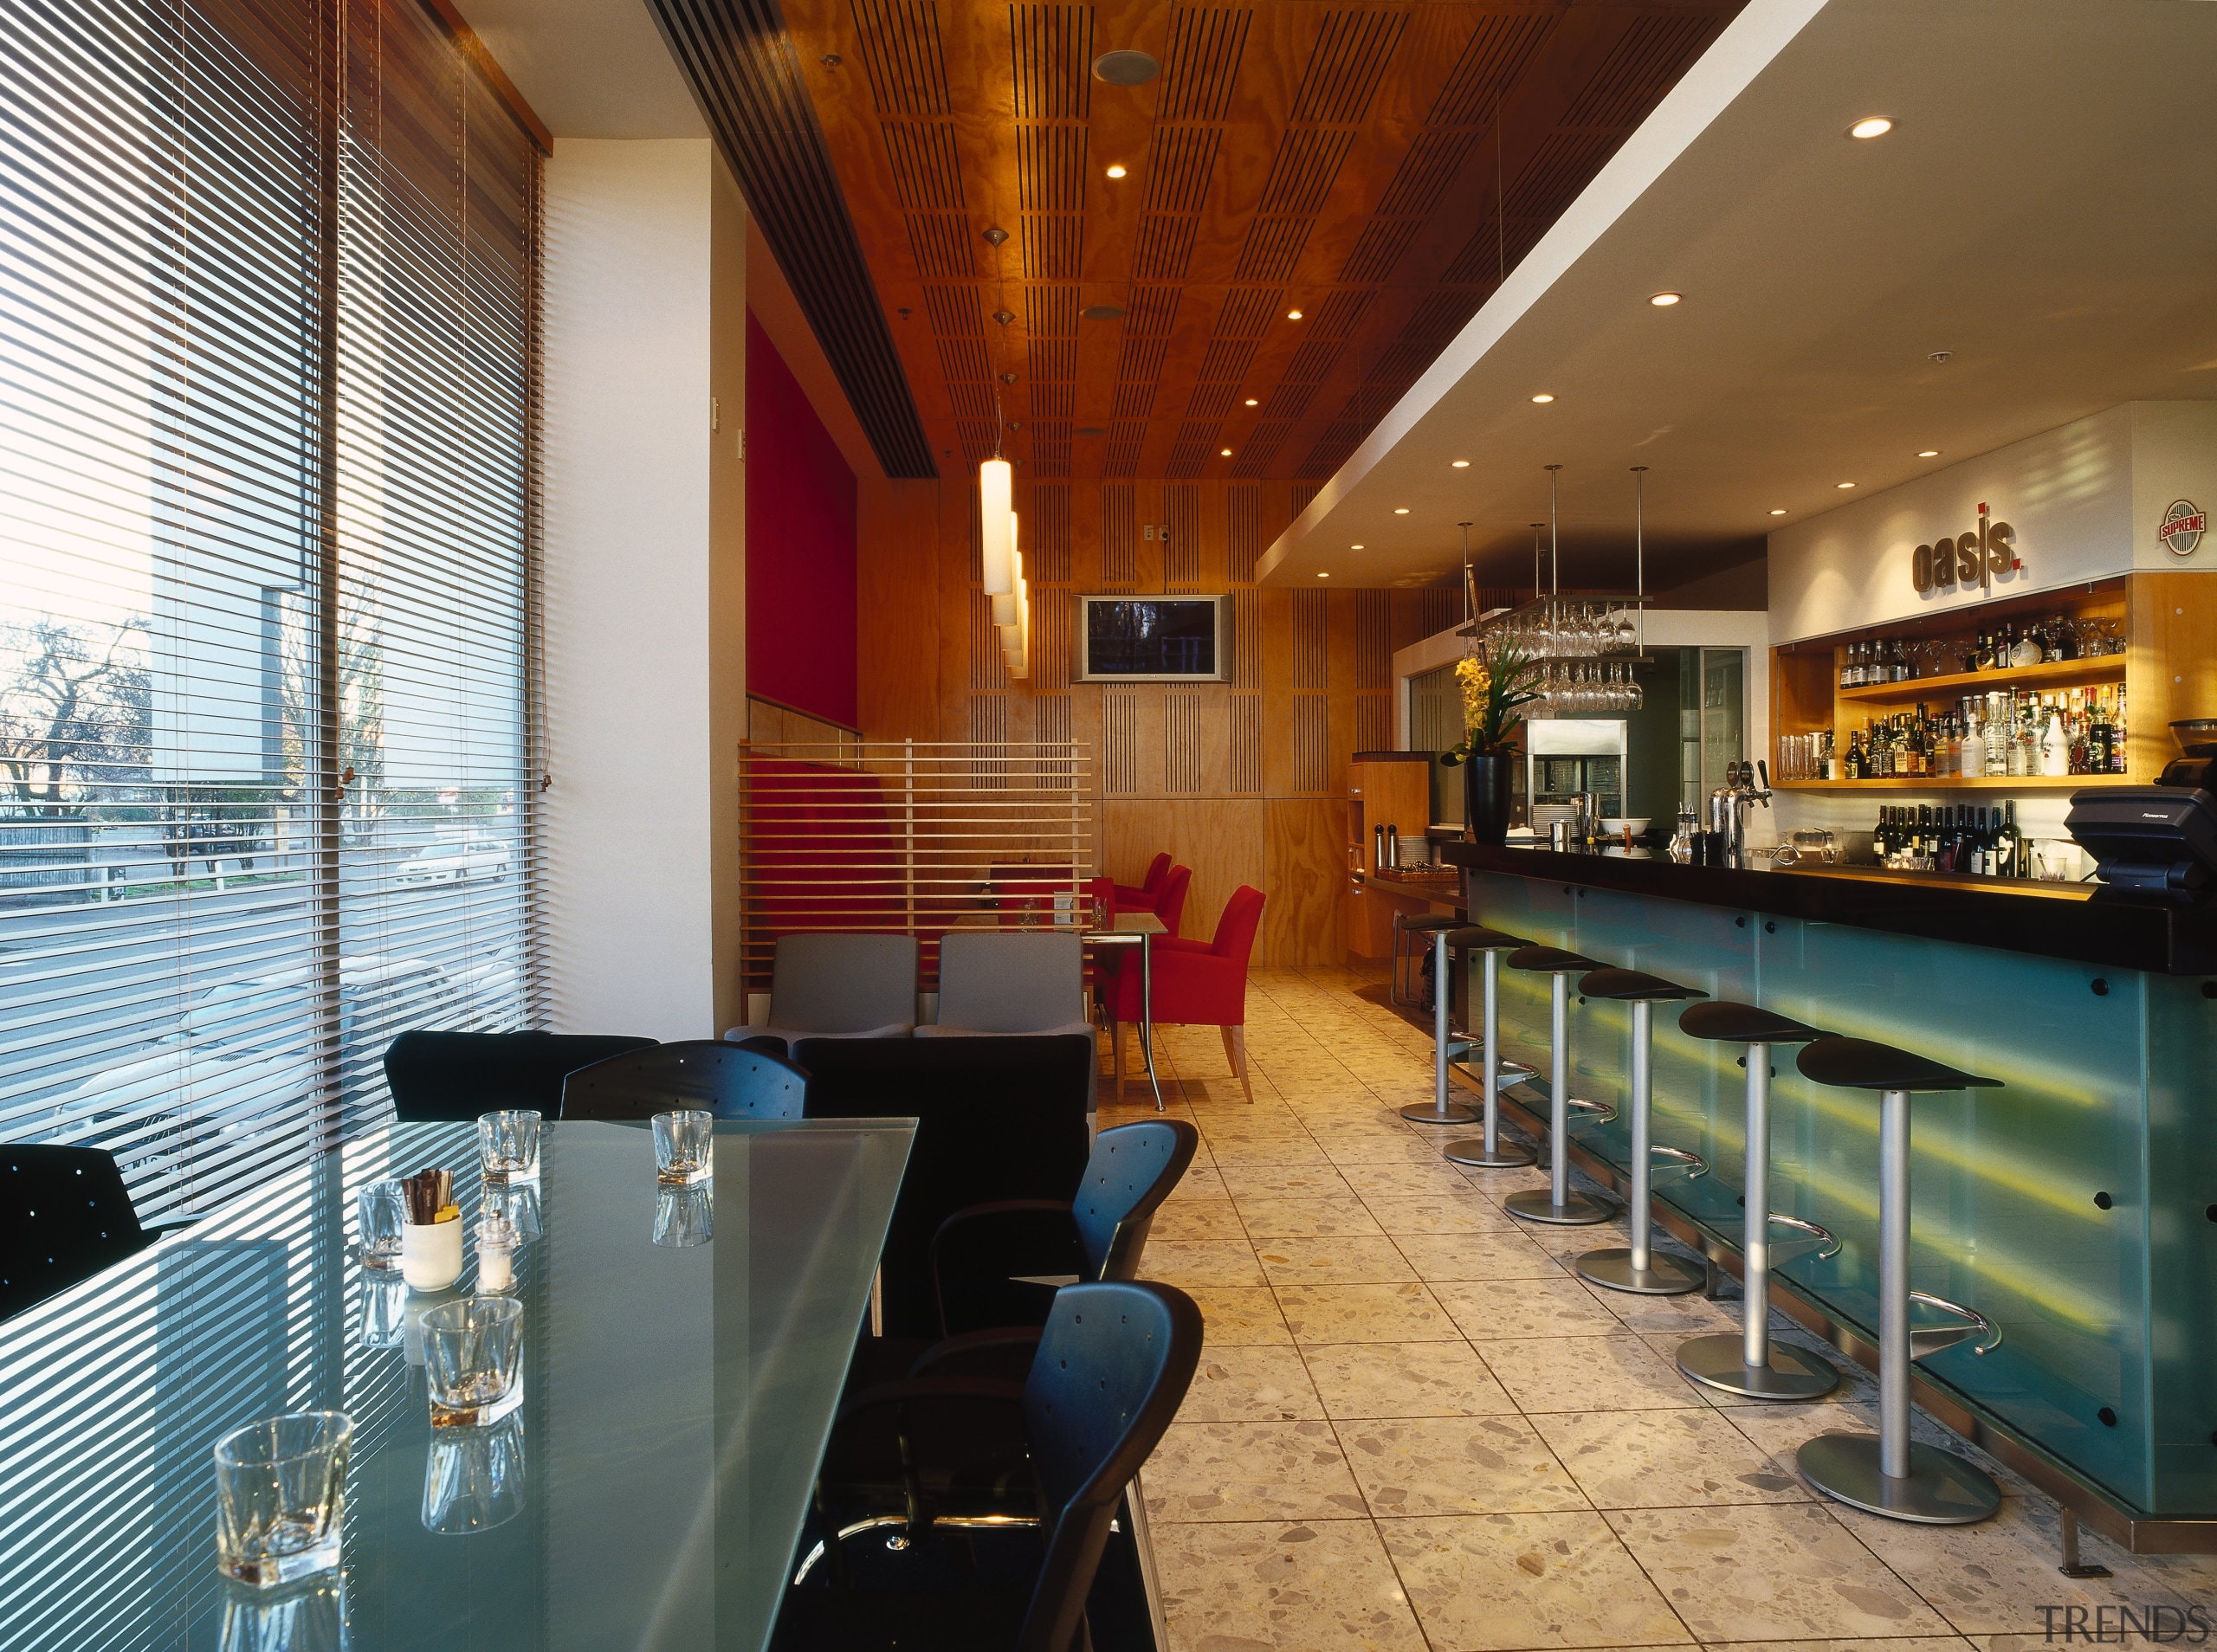 Interior view of the oasis restaurant bar, glass bar, café, interior design, real estate, restaurant, brown